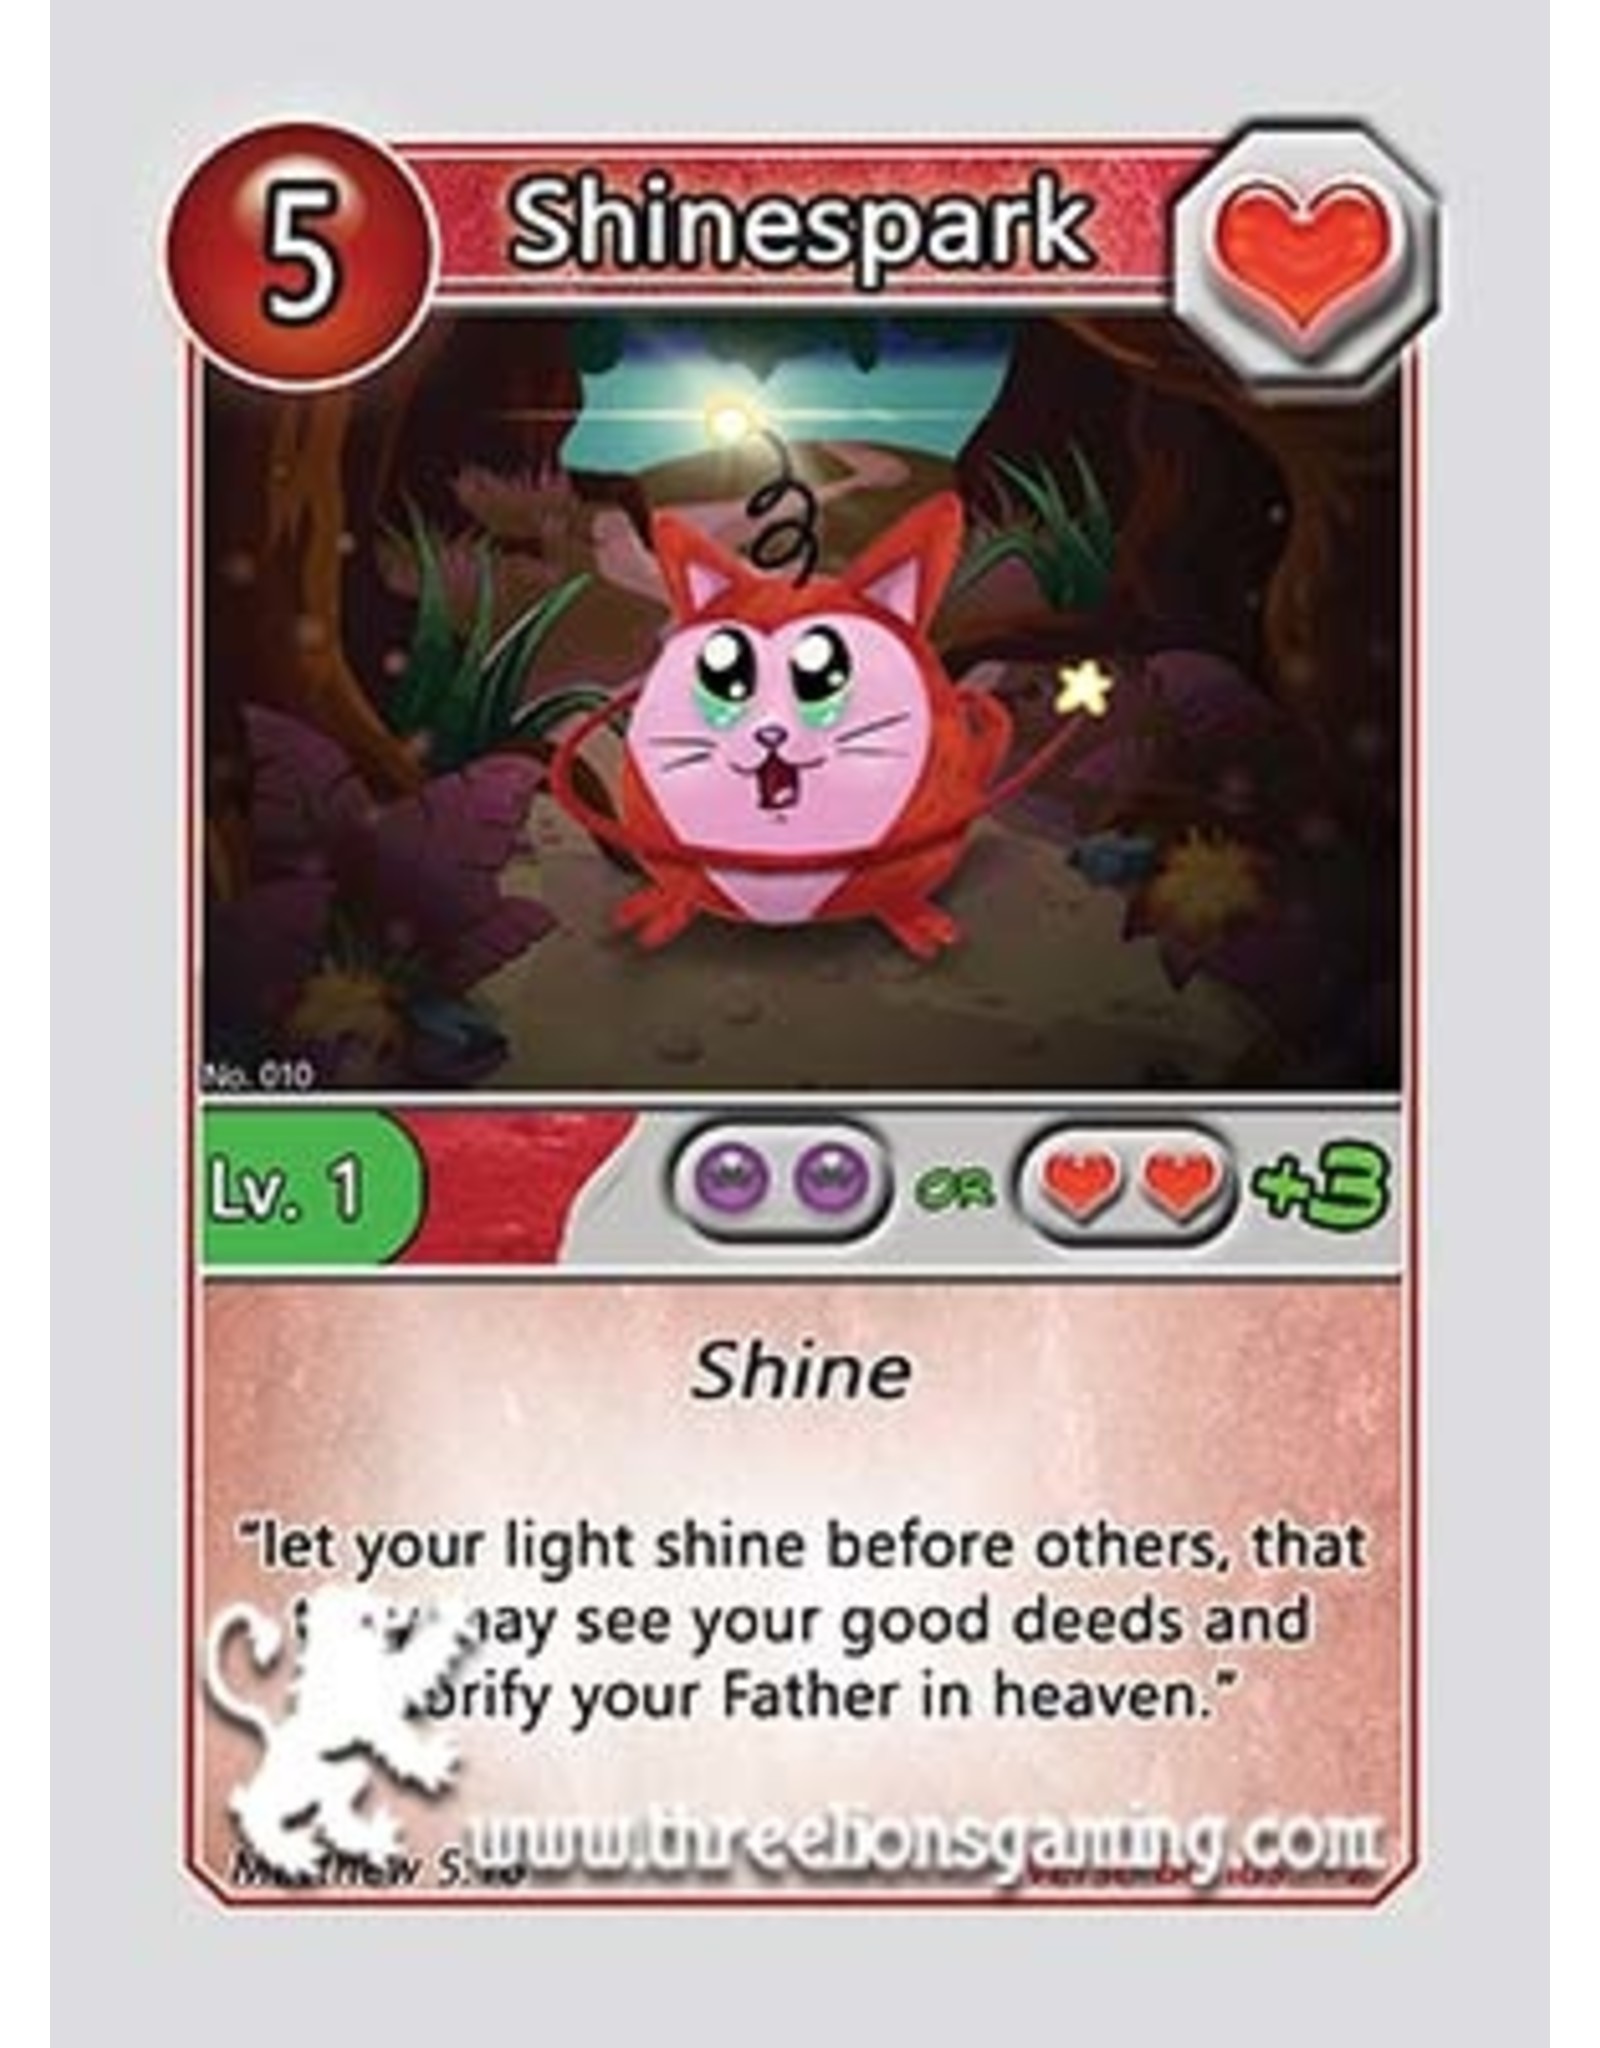 S1: Shinespark